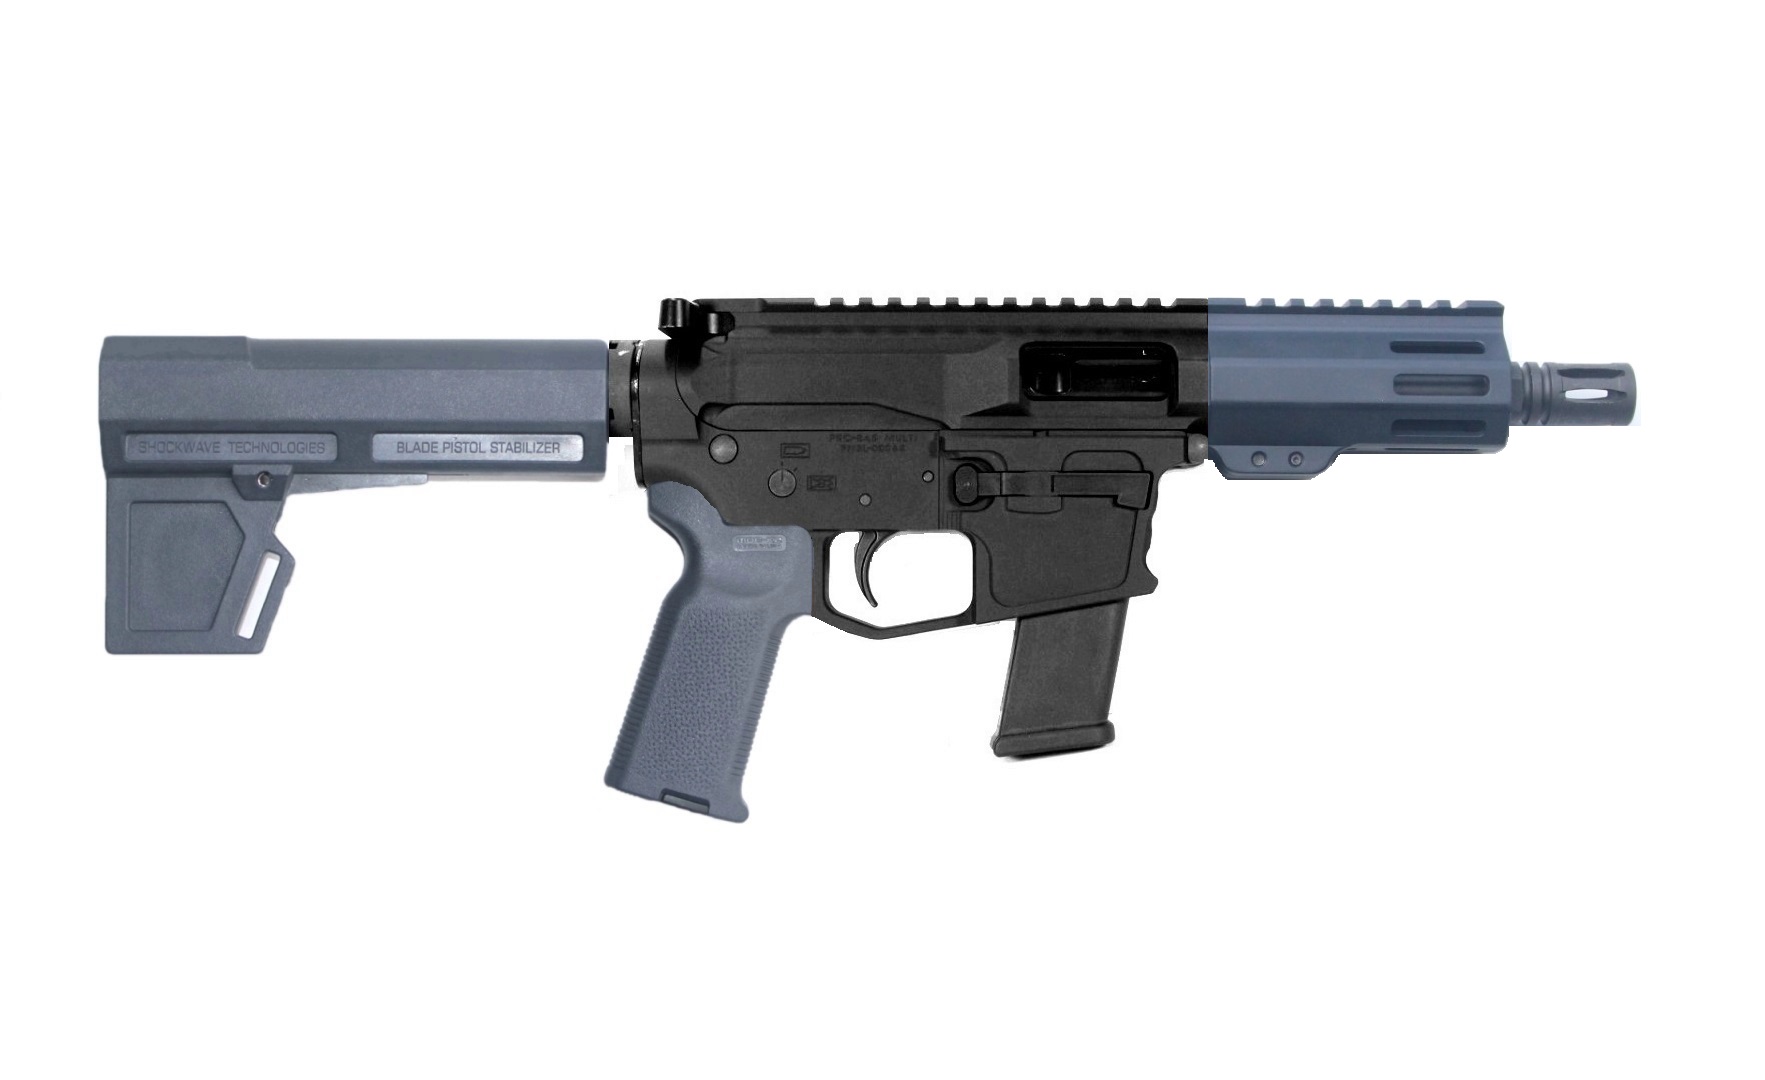 P2A PATRIOT 5" 45 ACP 1/16 Pistol Caliber Melonite M-LOK Pistol - For Suppressors - BLK/GRAY